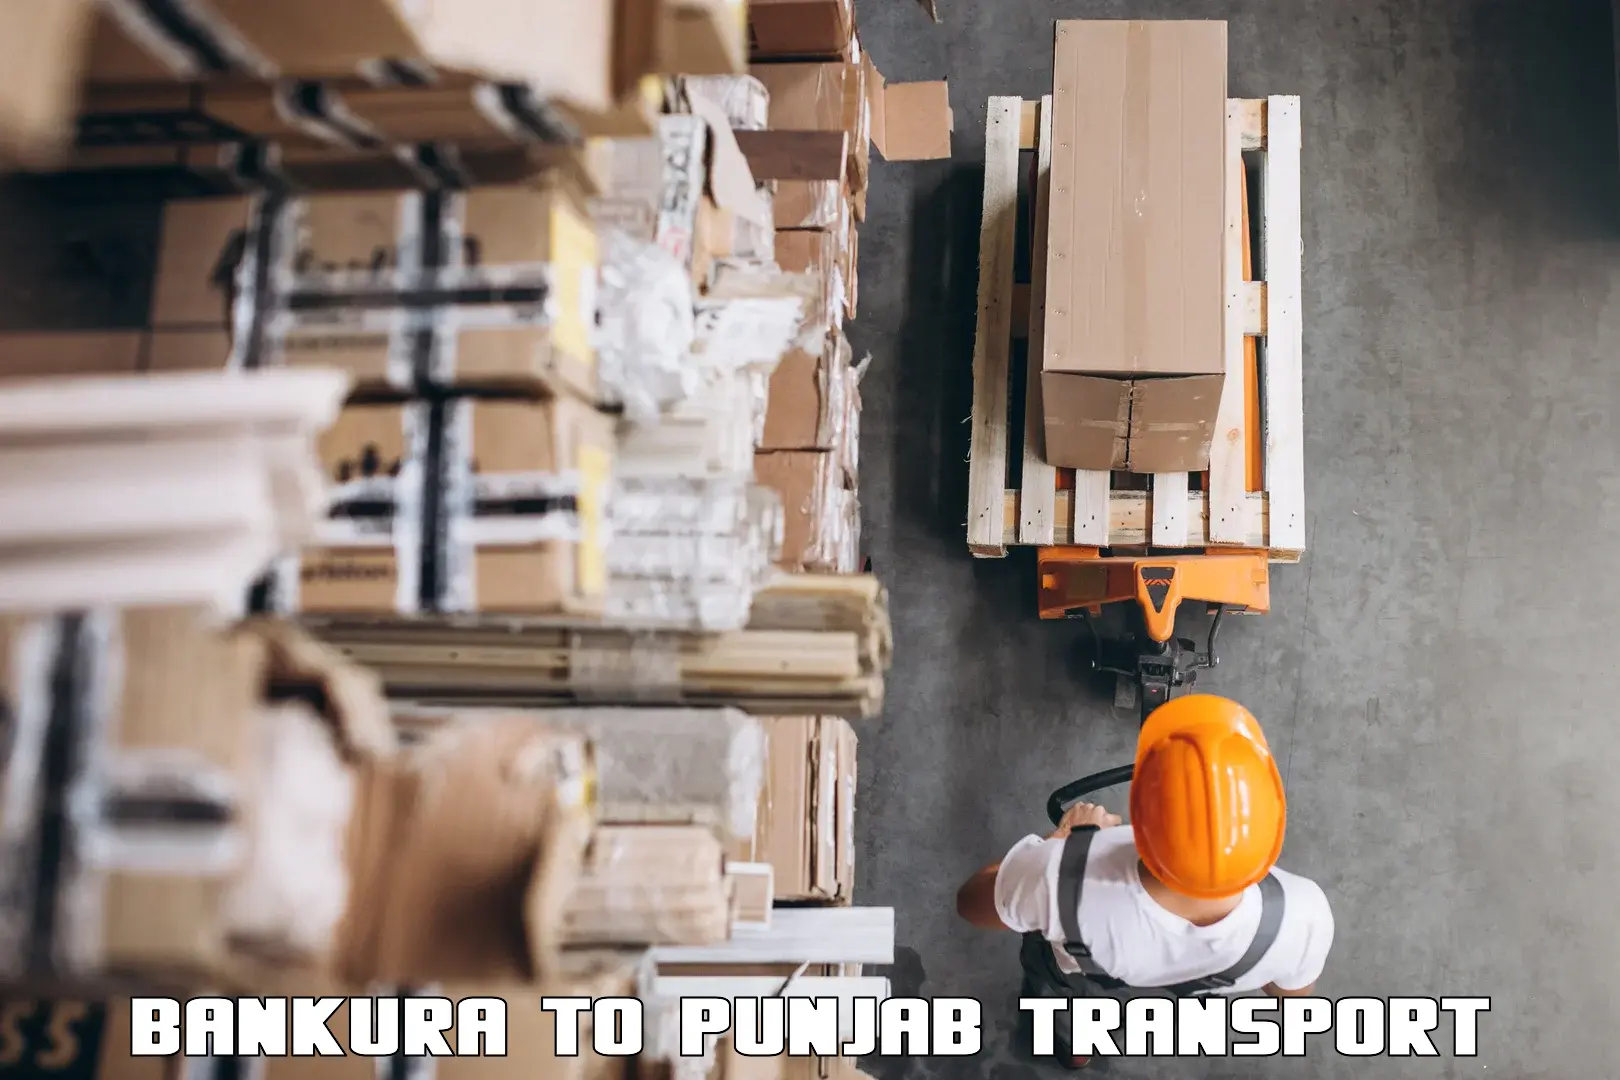 Container transport service Bankura to IIT Ropar